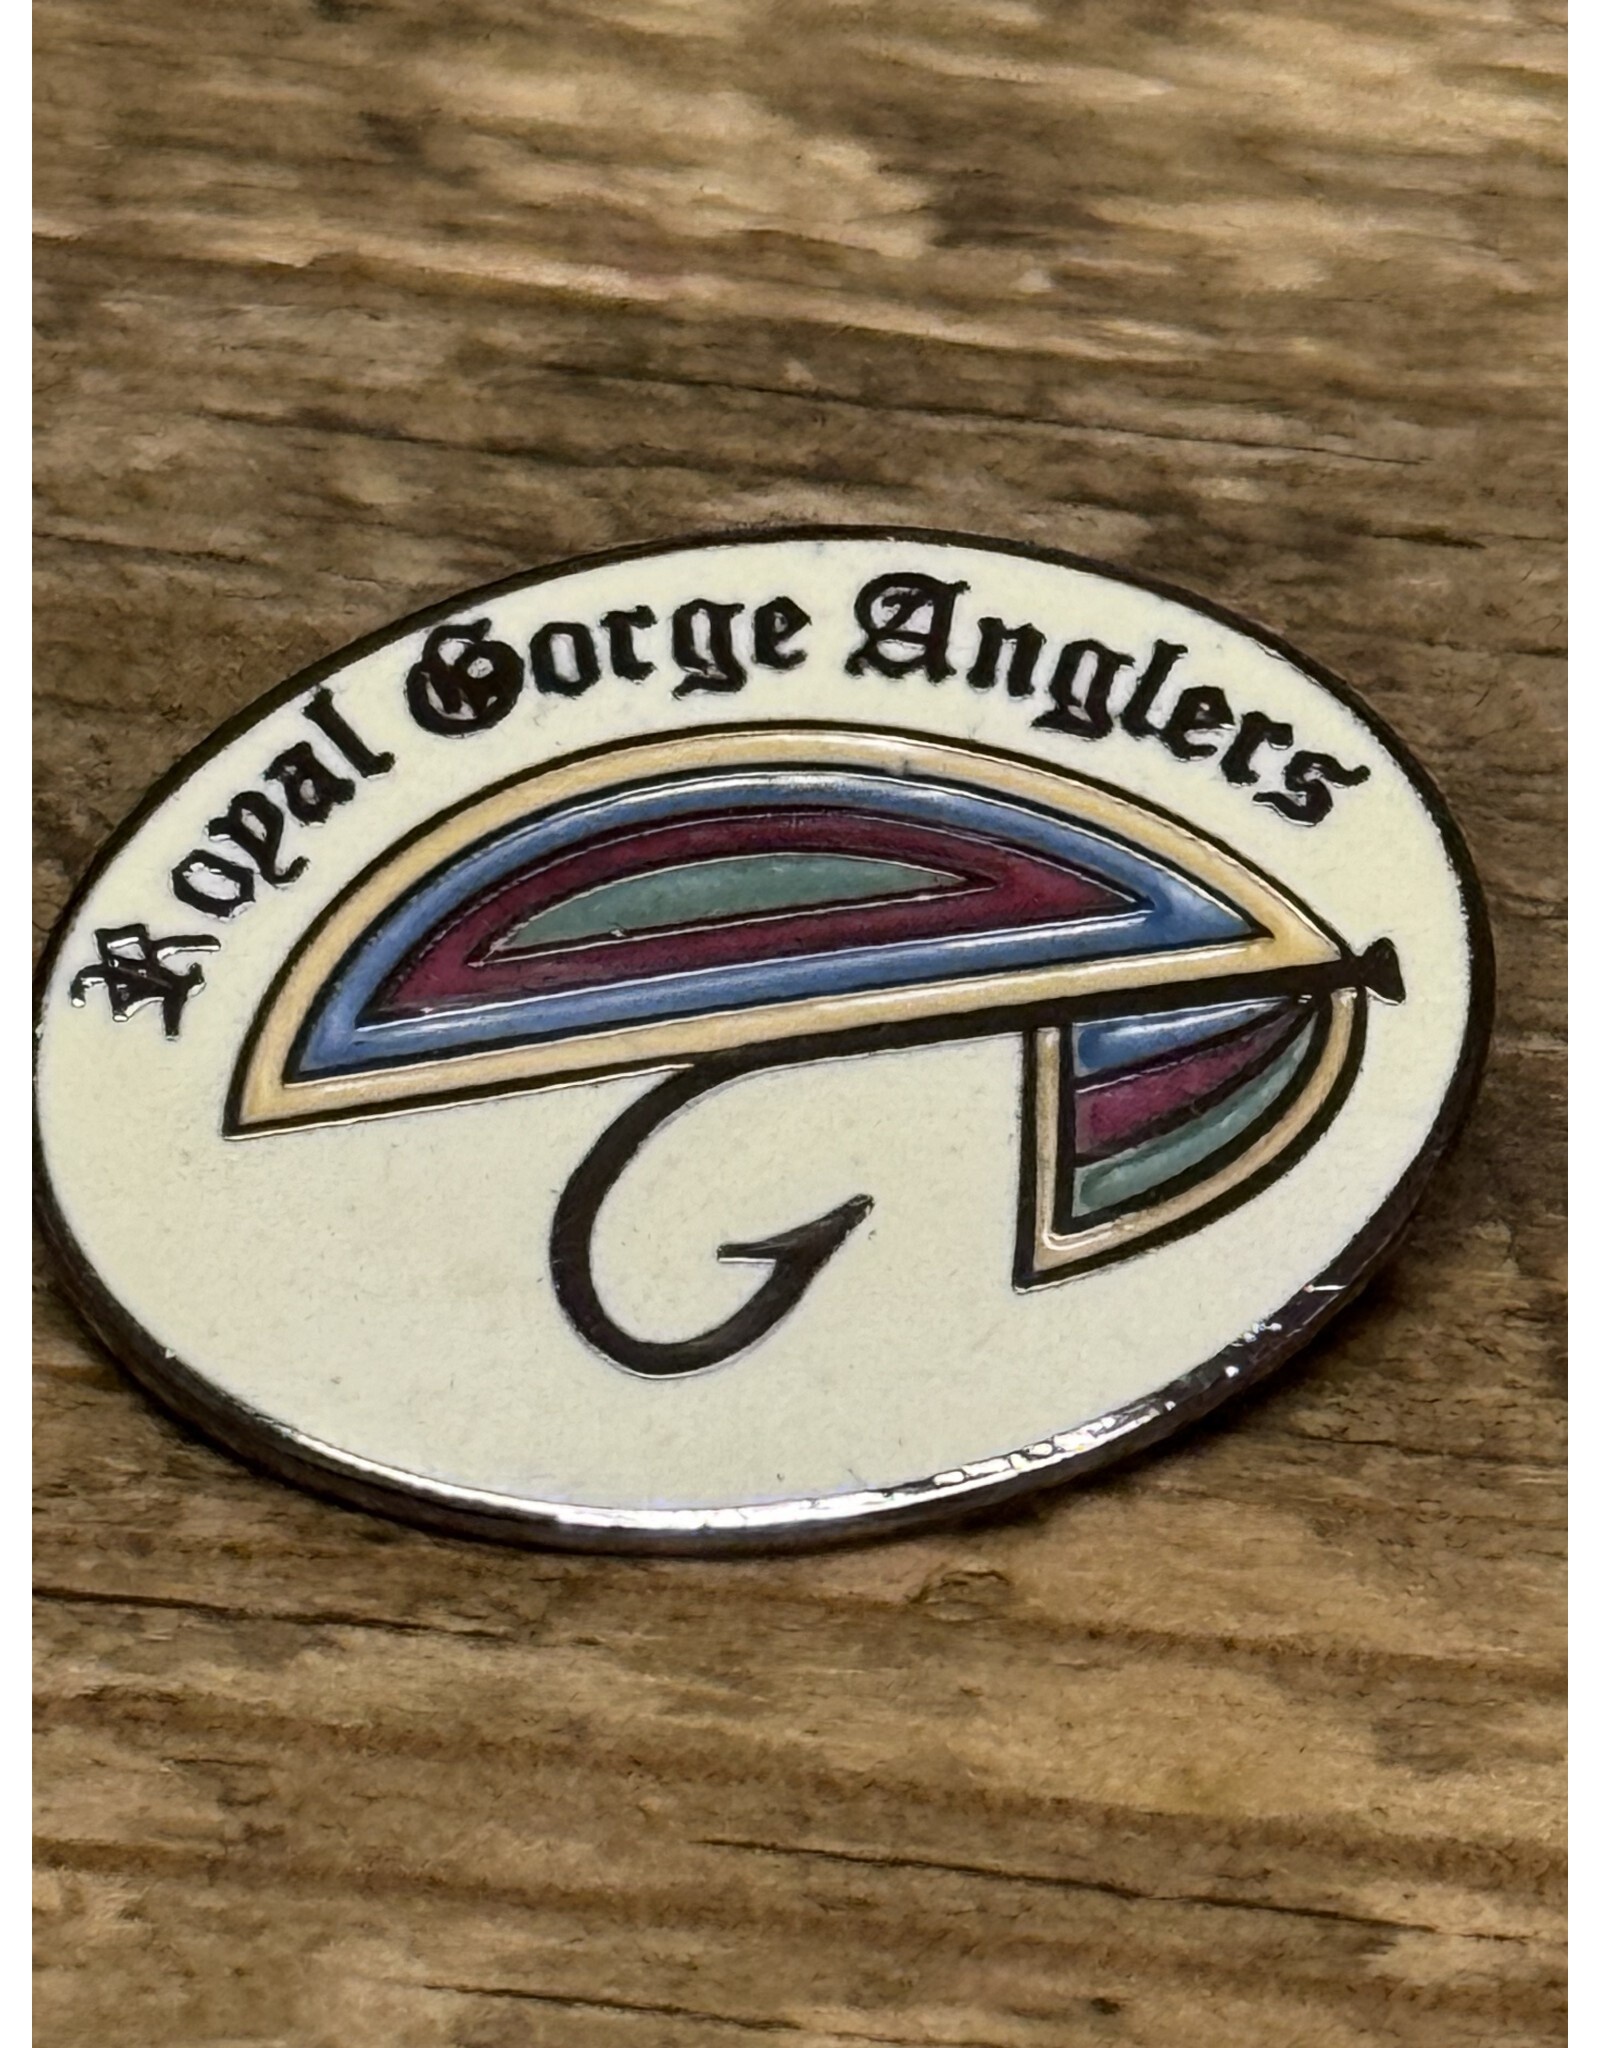 Royal Gorge Anglers "Traditions" Pin